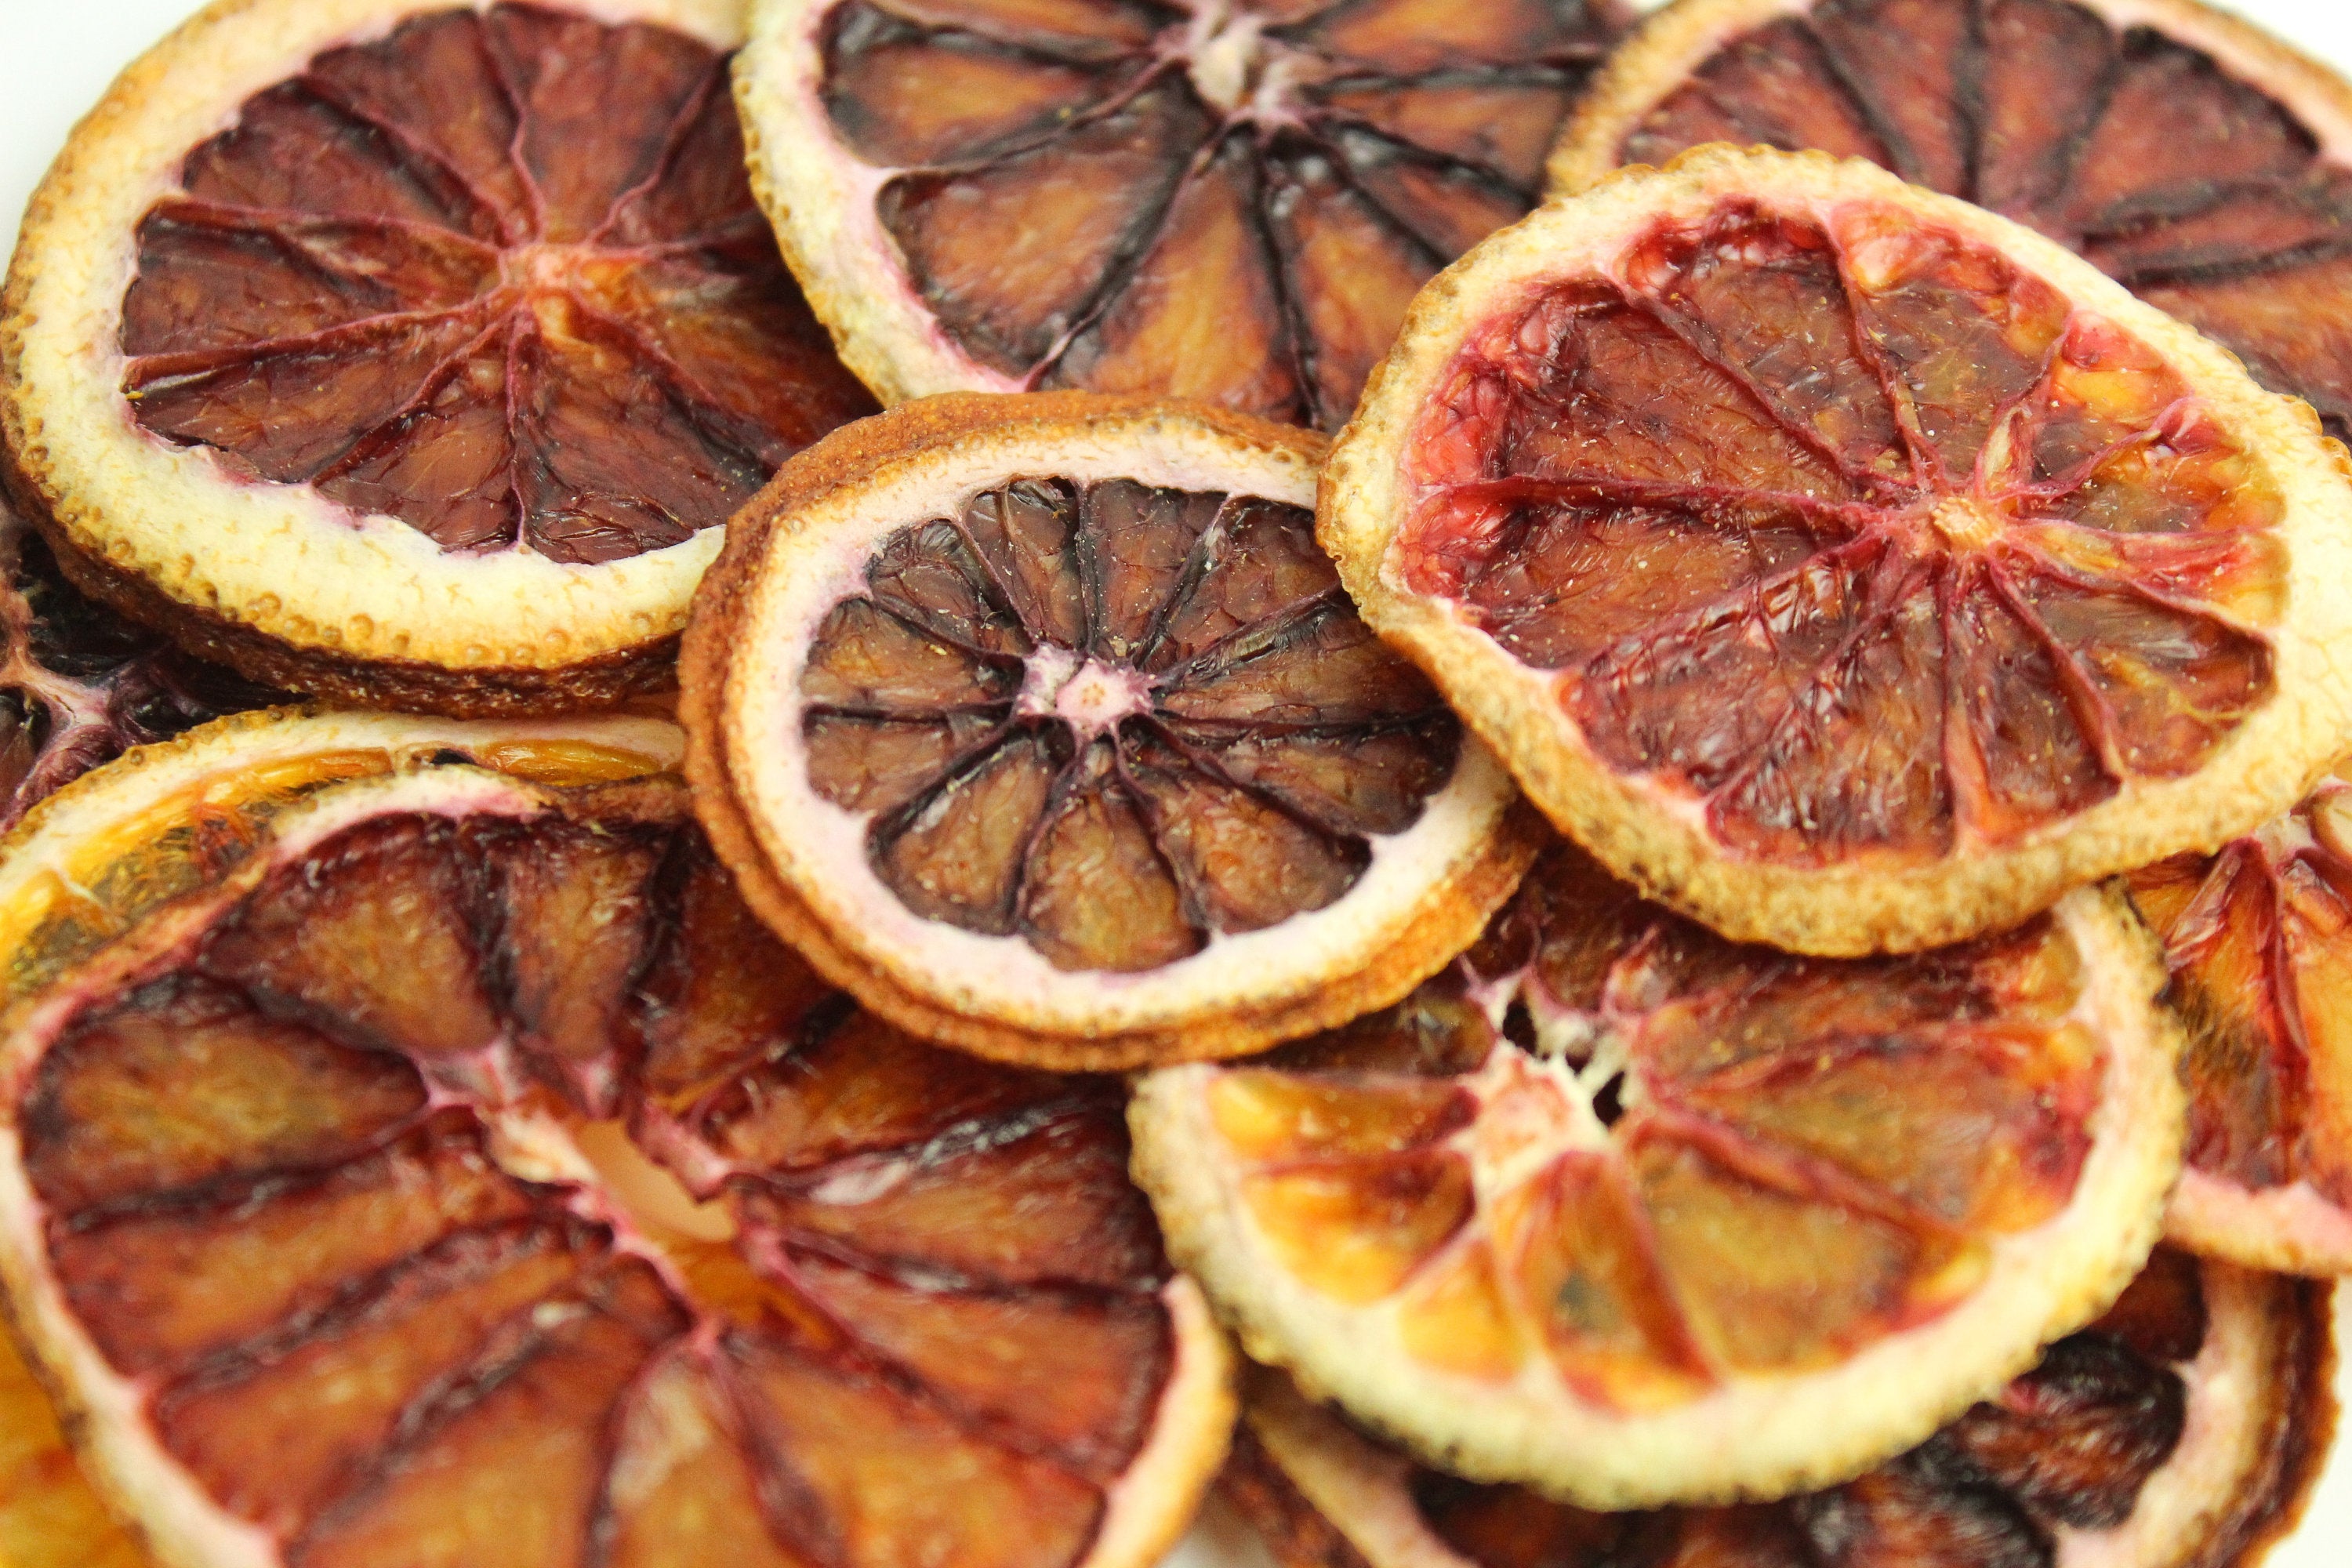 70 Dried Fruits. 10 pcs of Each Dried Grapefruit , Lime, Lemon, Tangerine (Mandarin), Orange, Kiwi and Blood Orange Slices, Organic